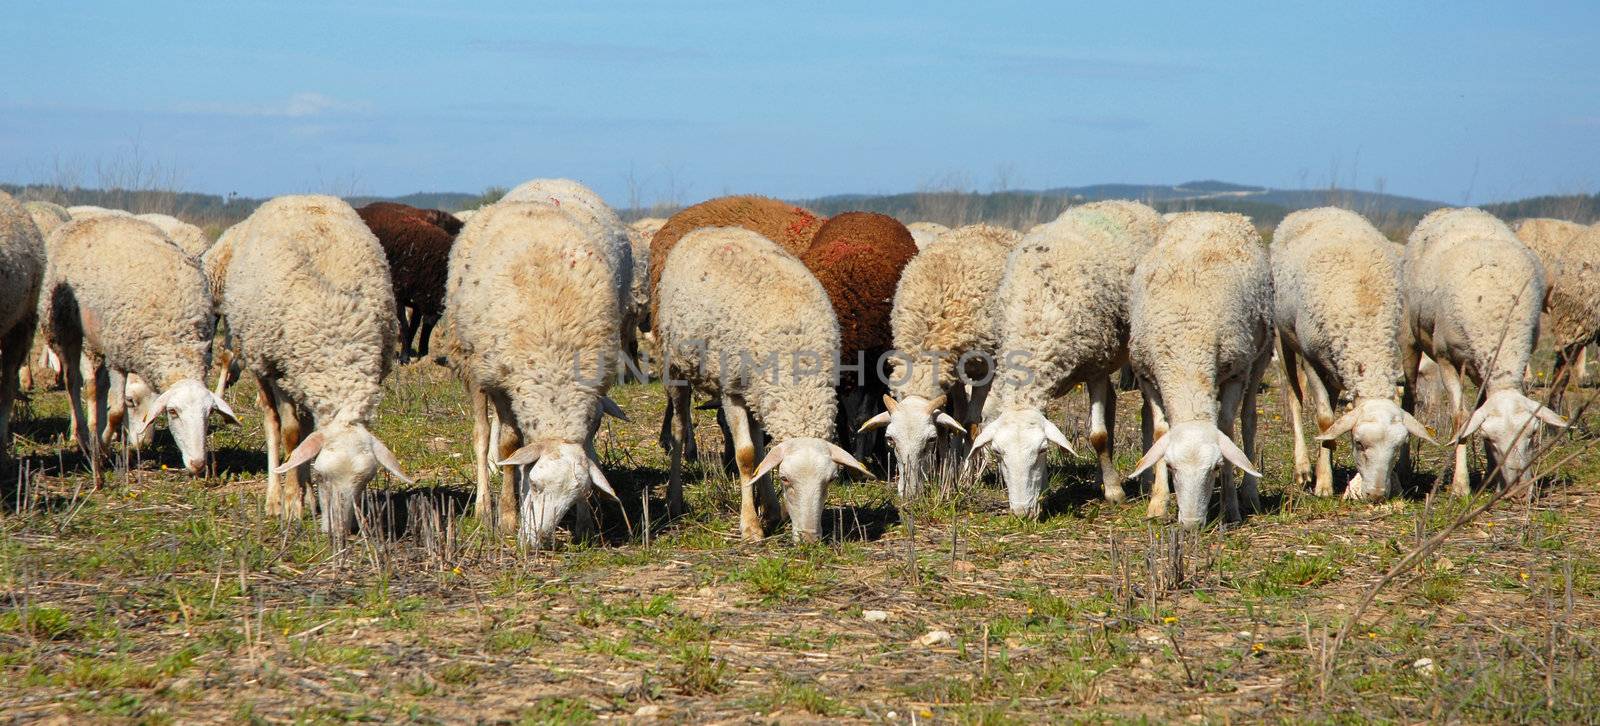 herd of sheeps by cynoclub